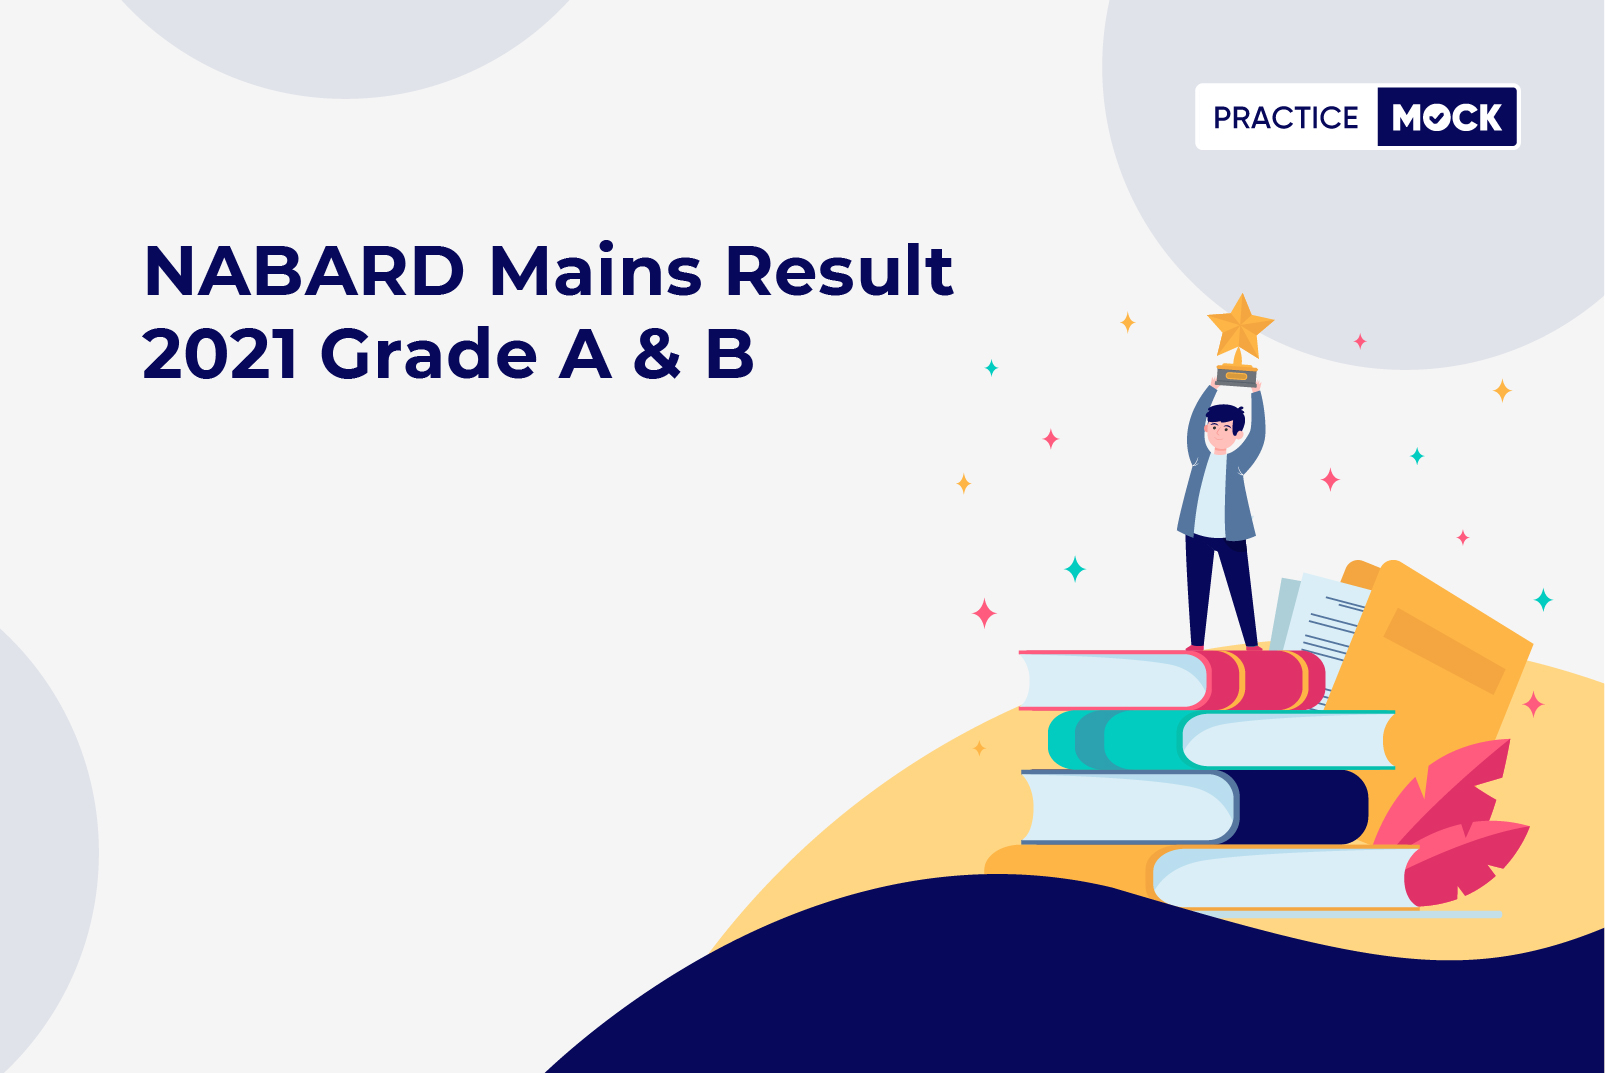 NABARD Mains Result 2021 Grade A & B